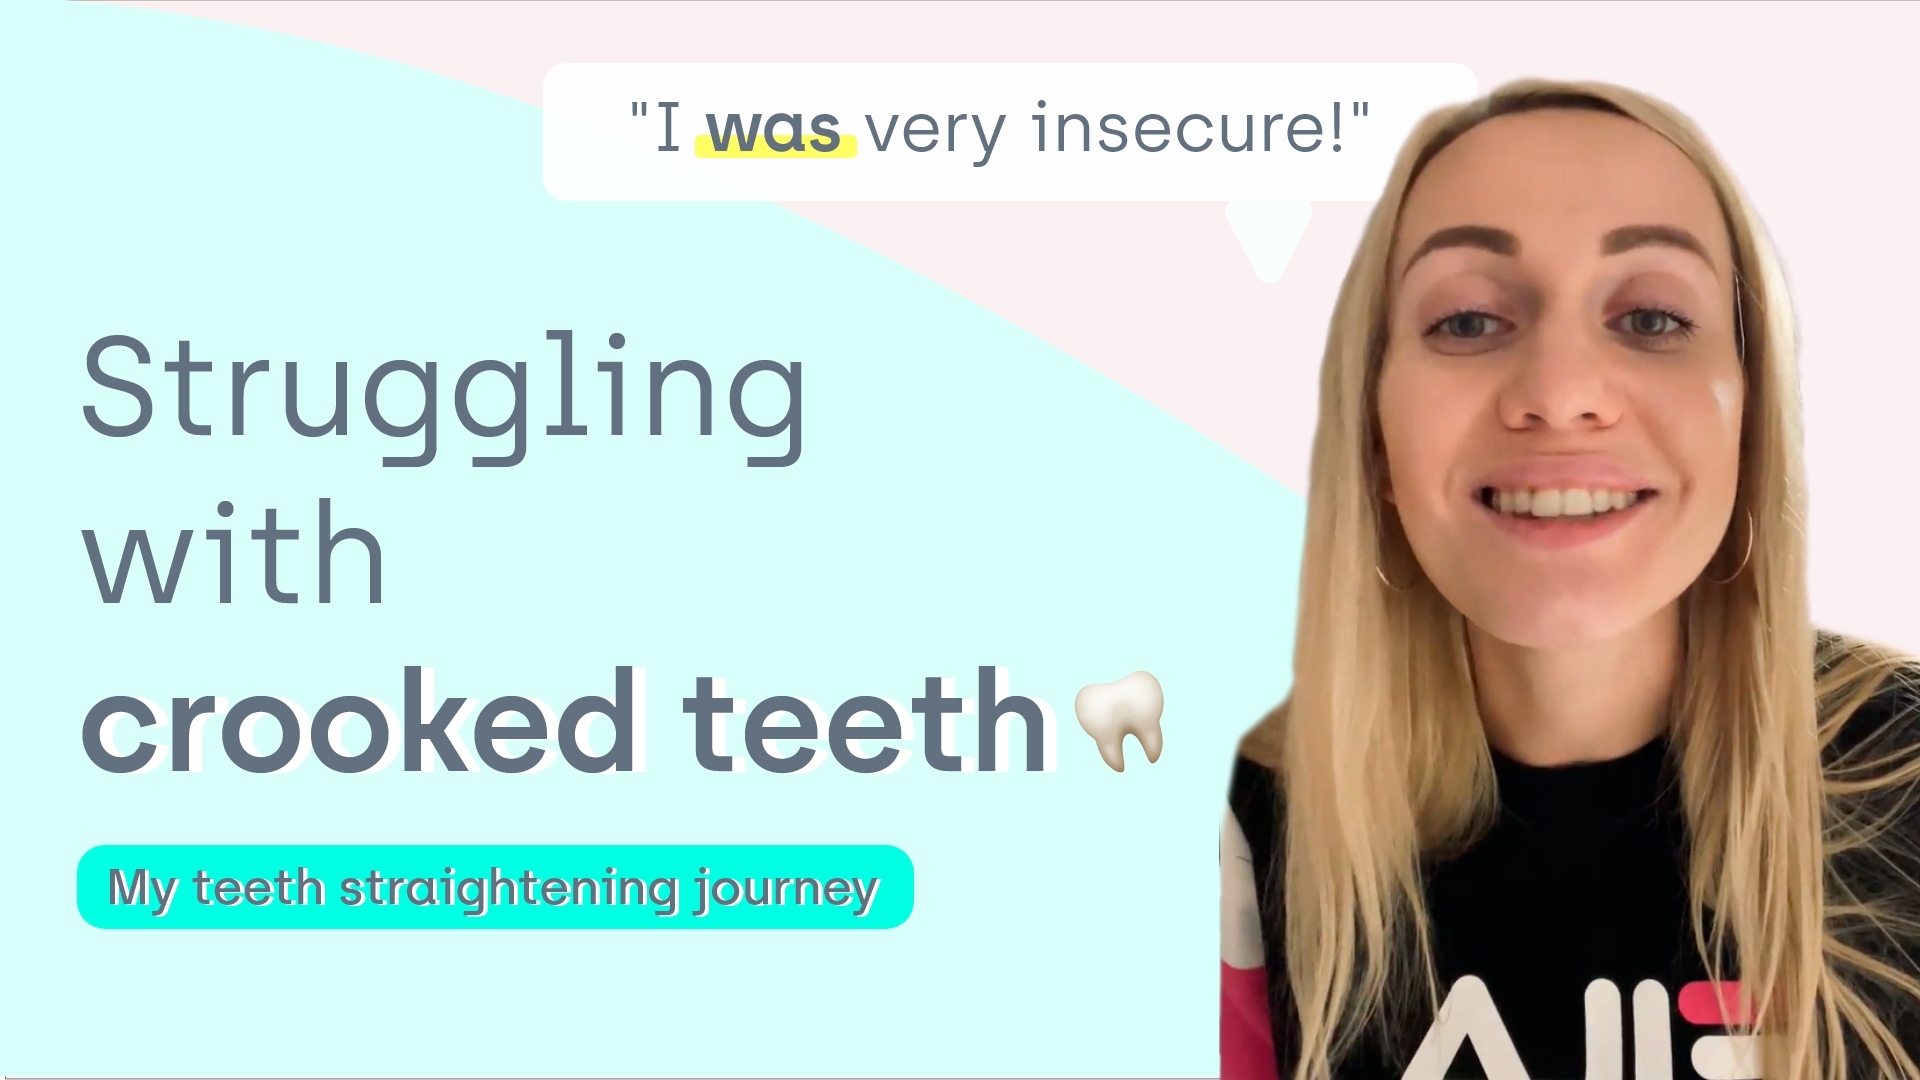 Daria crooked teeth review